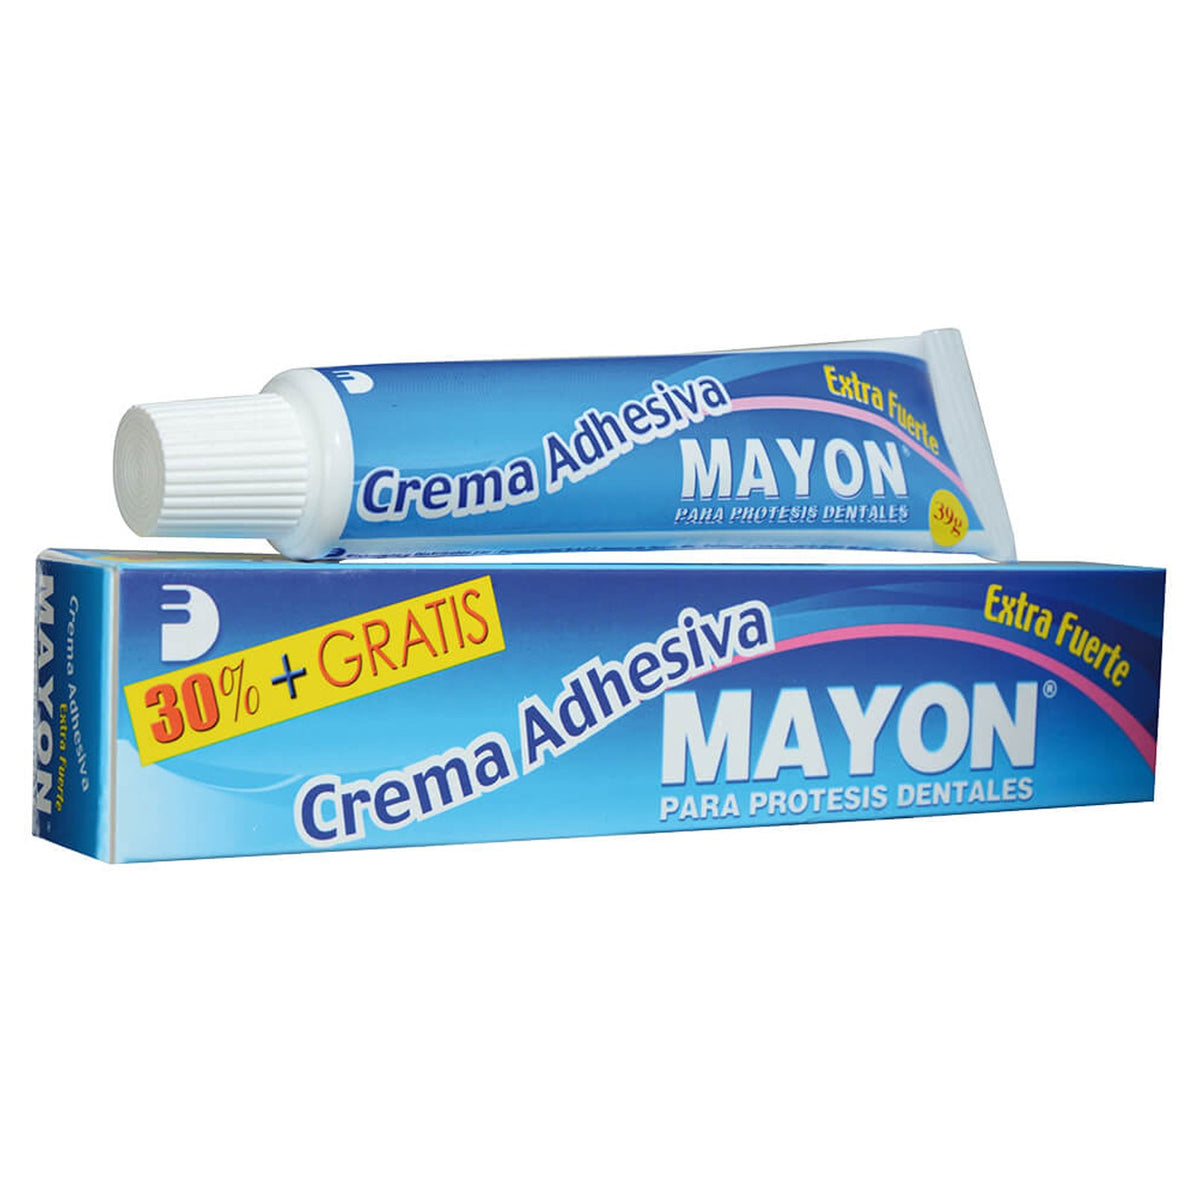 Mayon Crema Adhesiva Extra fuerte